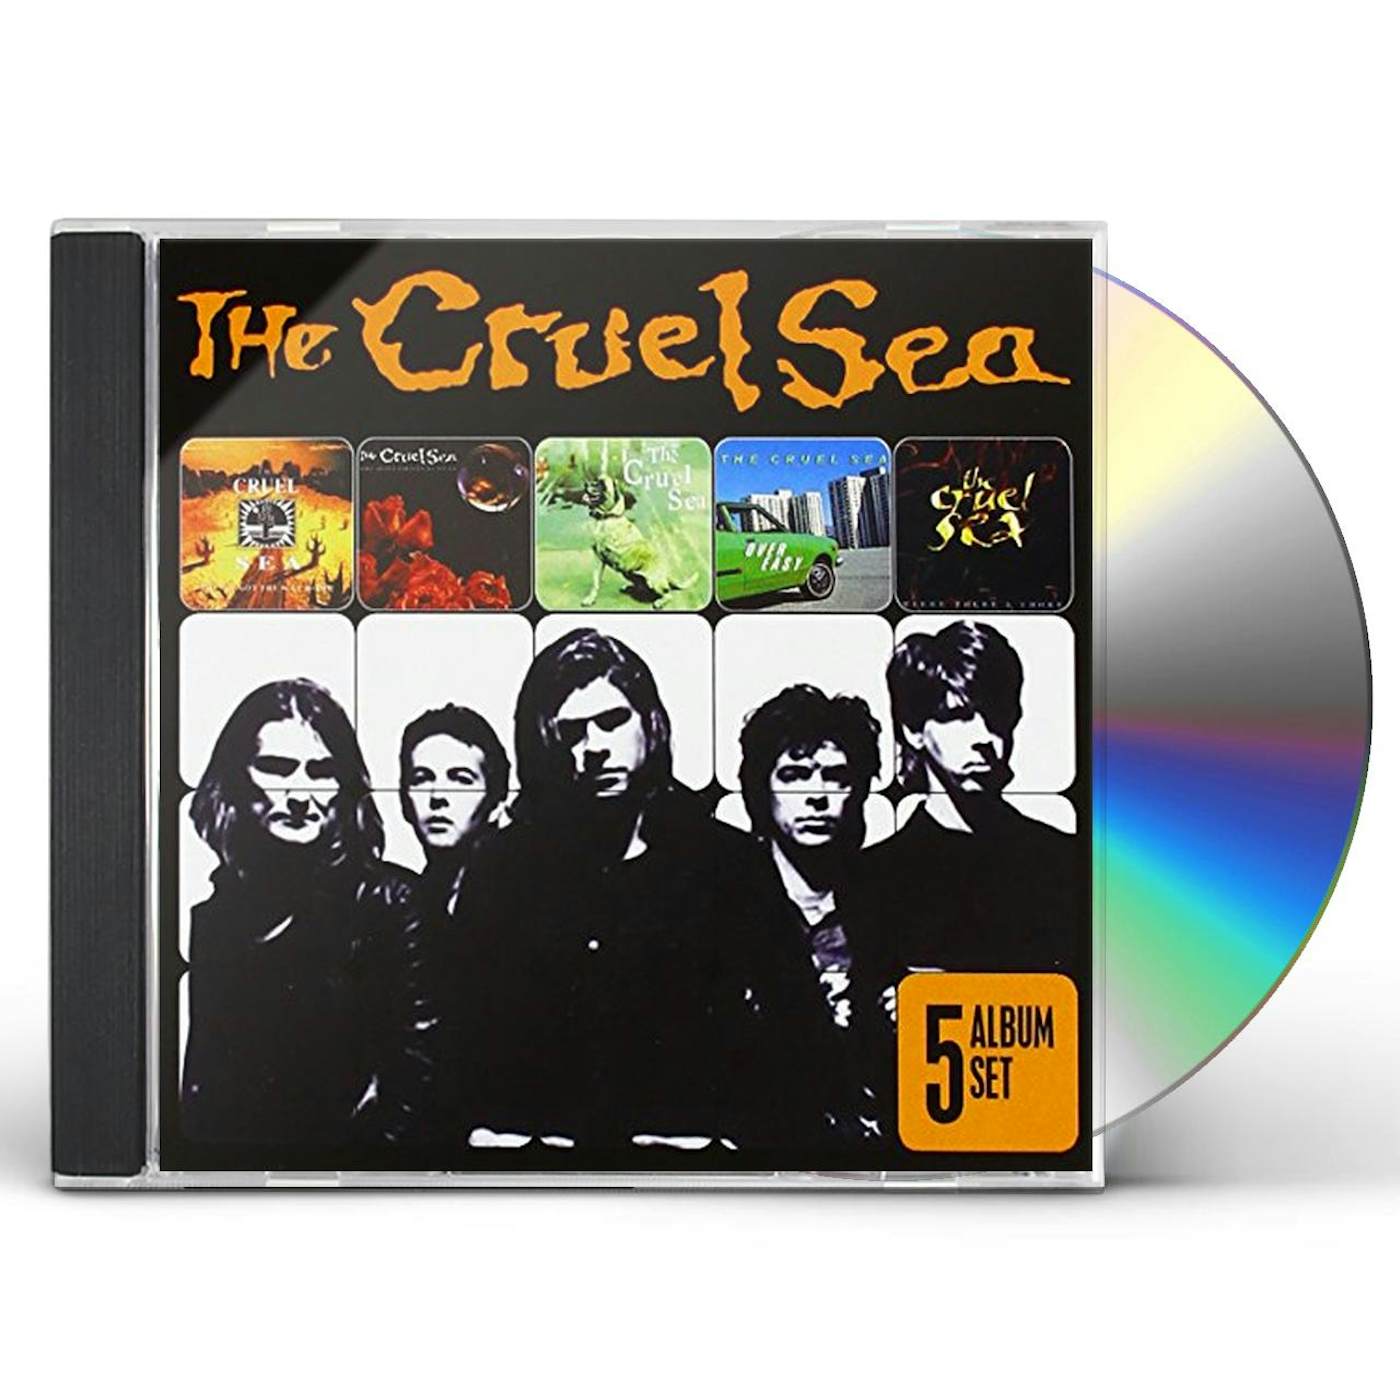 The Cruel Sea 5 ALBUM SET CD